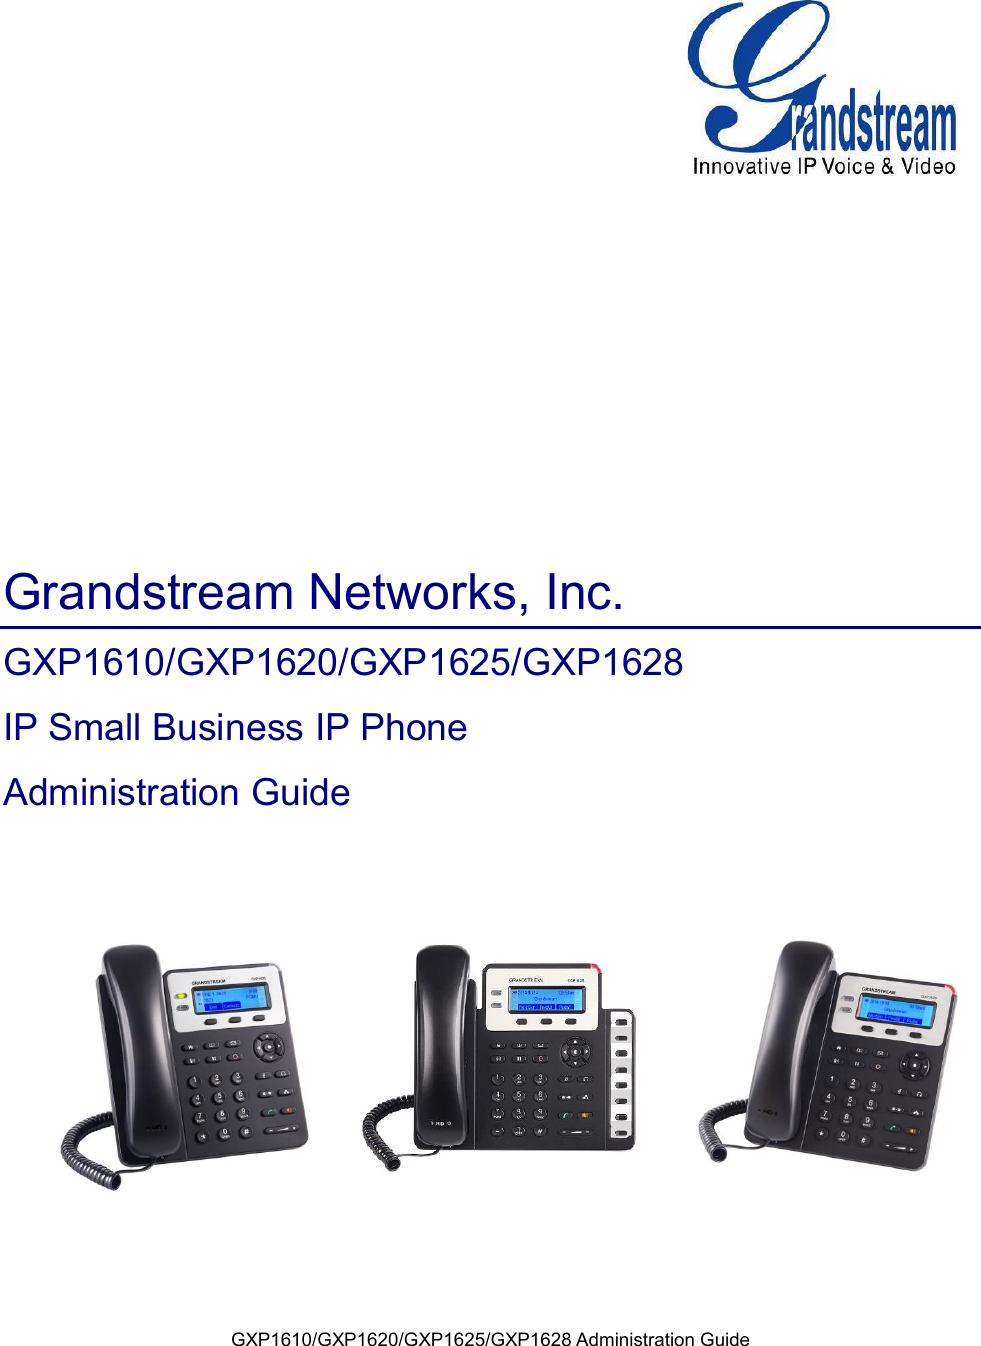 GXP1610/GXP1620/GXP1625/GXP1628 Administration Guide        Grandstream Networks, Inc. GXP1610/GXP1620/GXP1625/GXP1628 IP Small Business IP Phone Administration Guide  